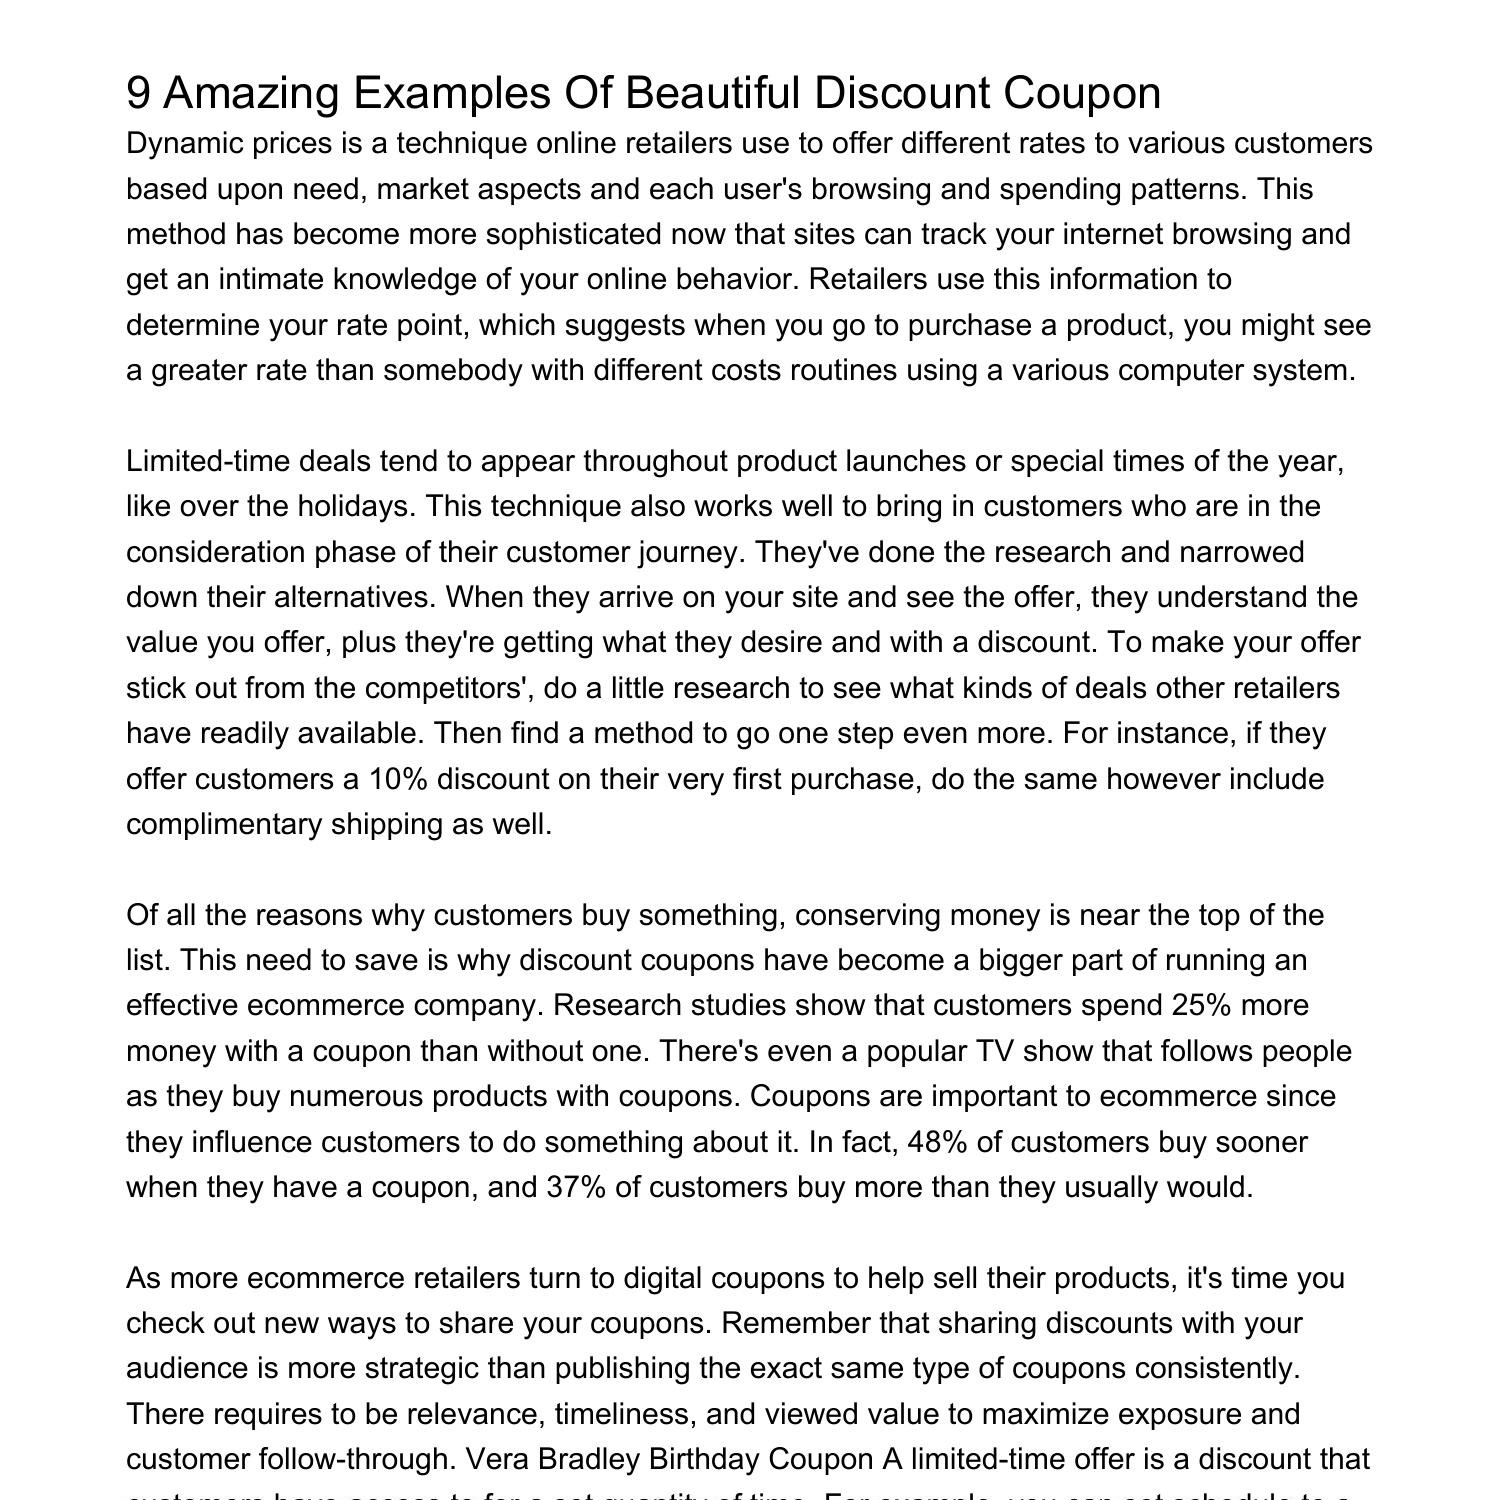 9 Amazing Examples Of Beautiful Discount Coupon eyzkq.pdf.pdf | DocDroid